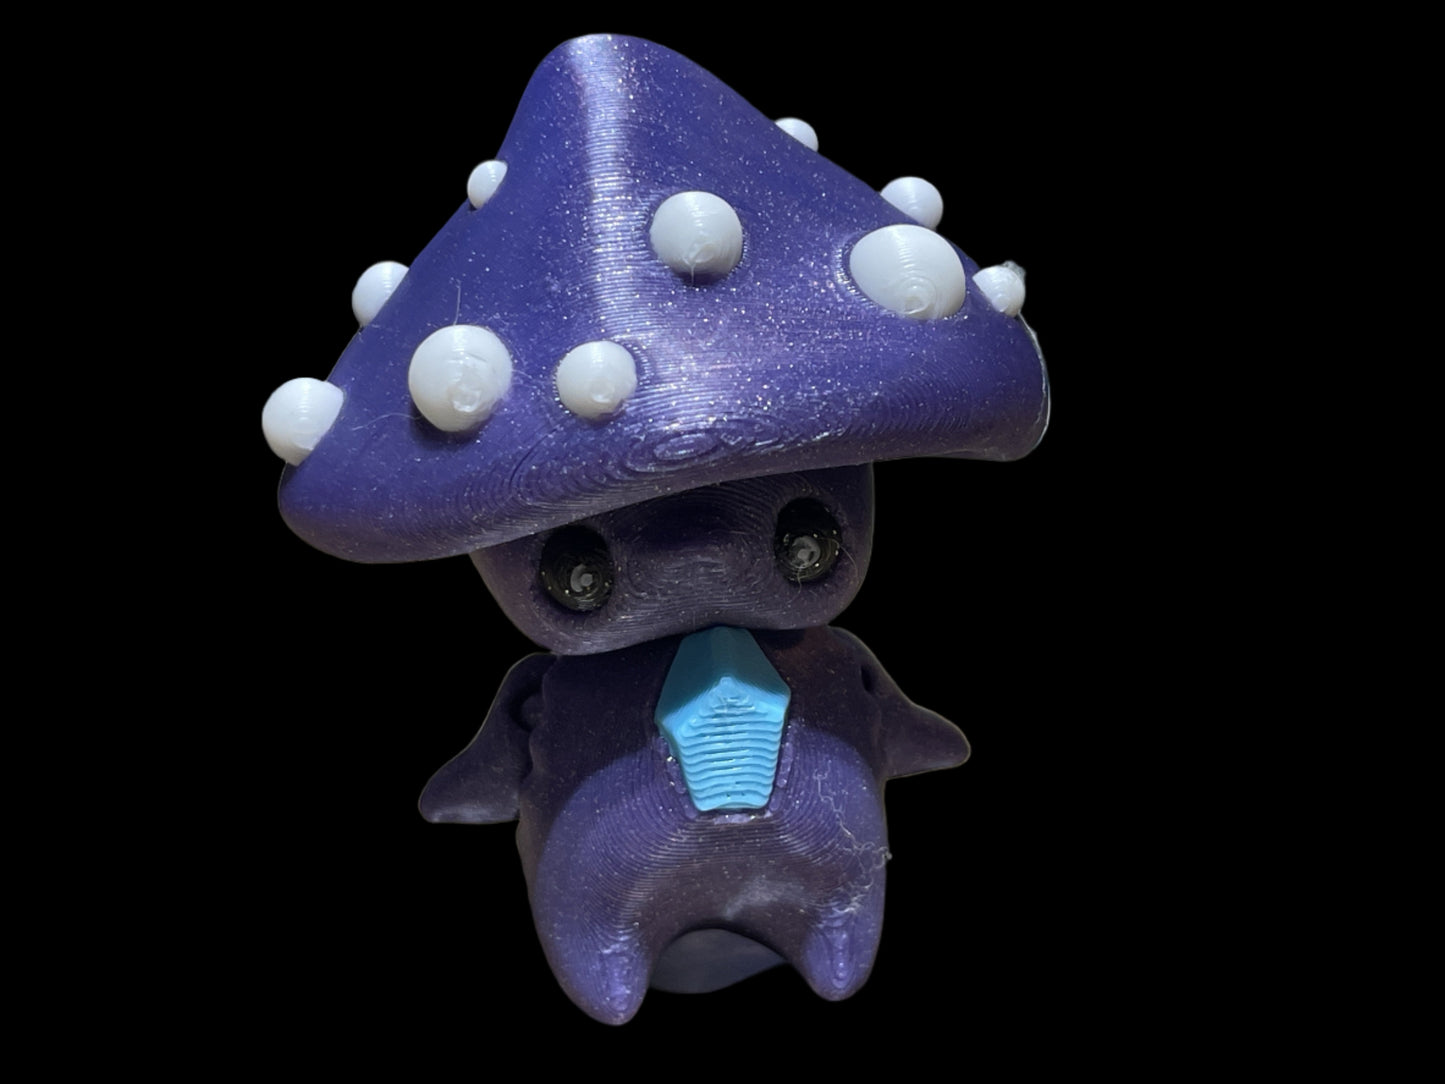 mushroom fungi head pixie  gem chest dots cute adorable collectible figurine fidget personalizable